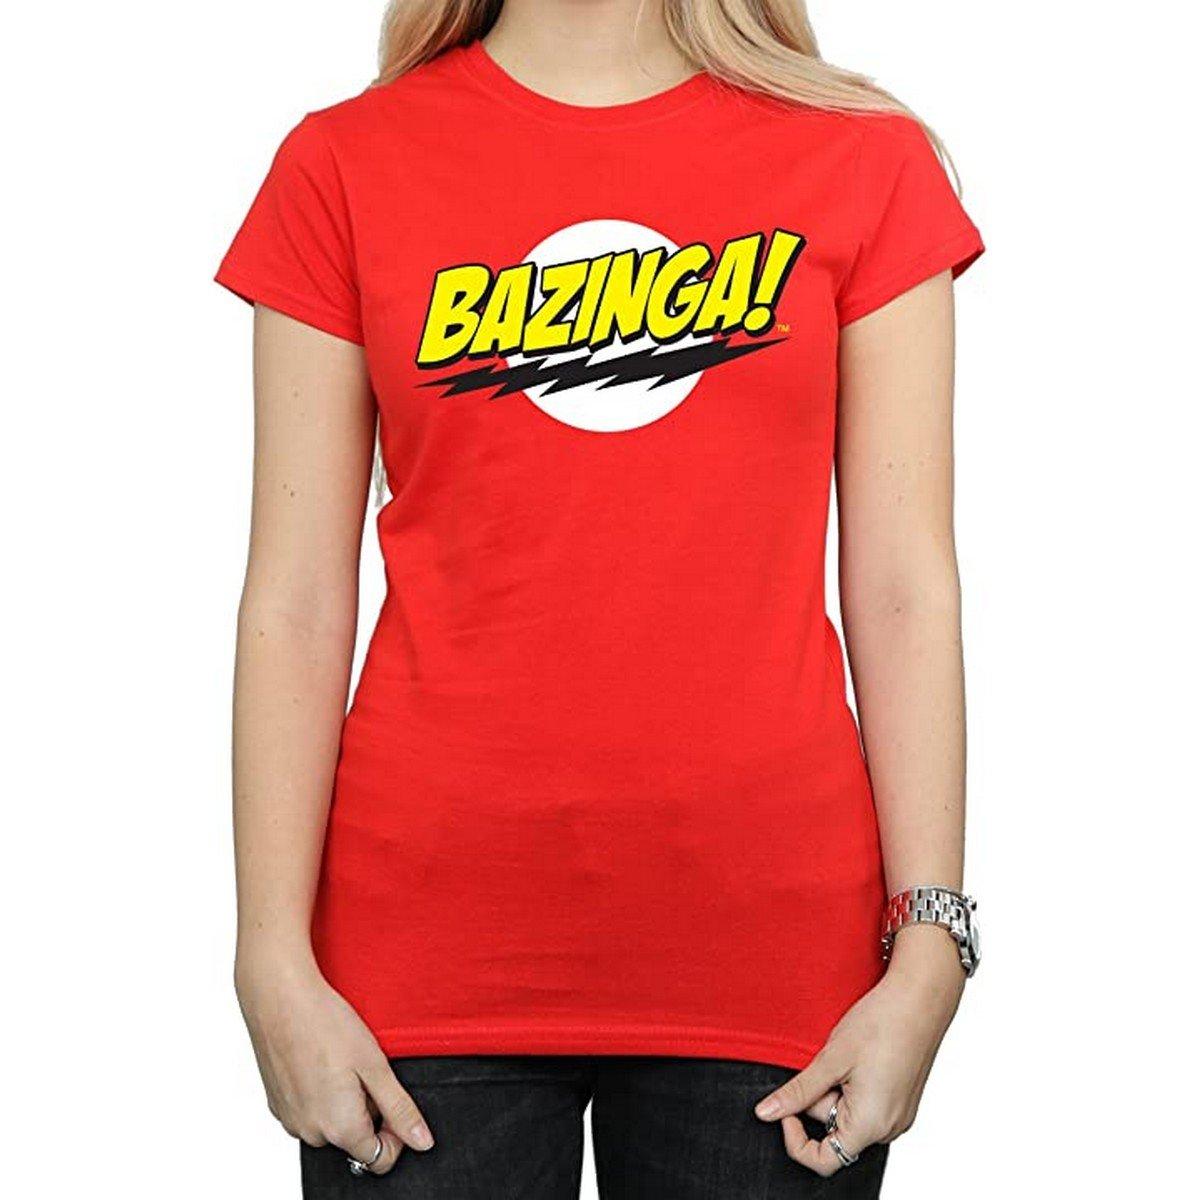 Bazinga Tshirt Damen Rot Bunt M von The Big Bang Theory